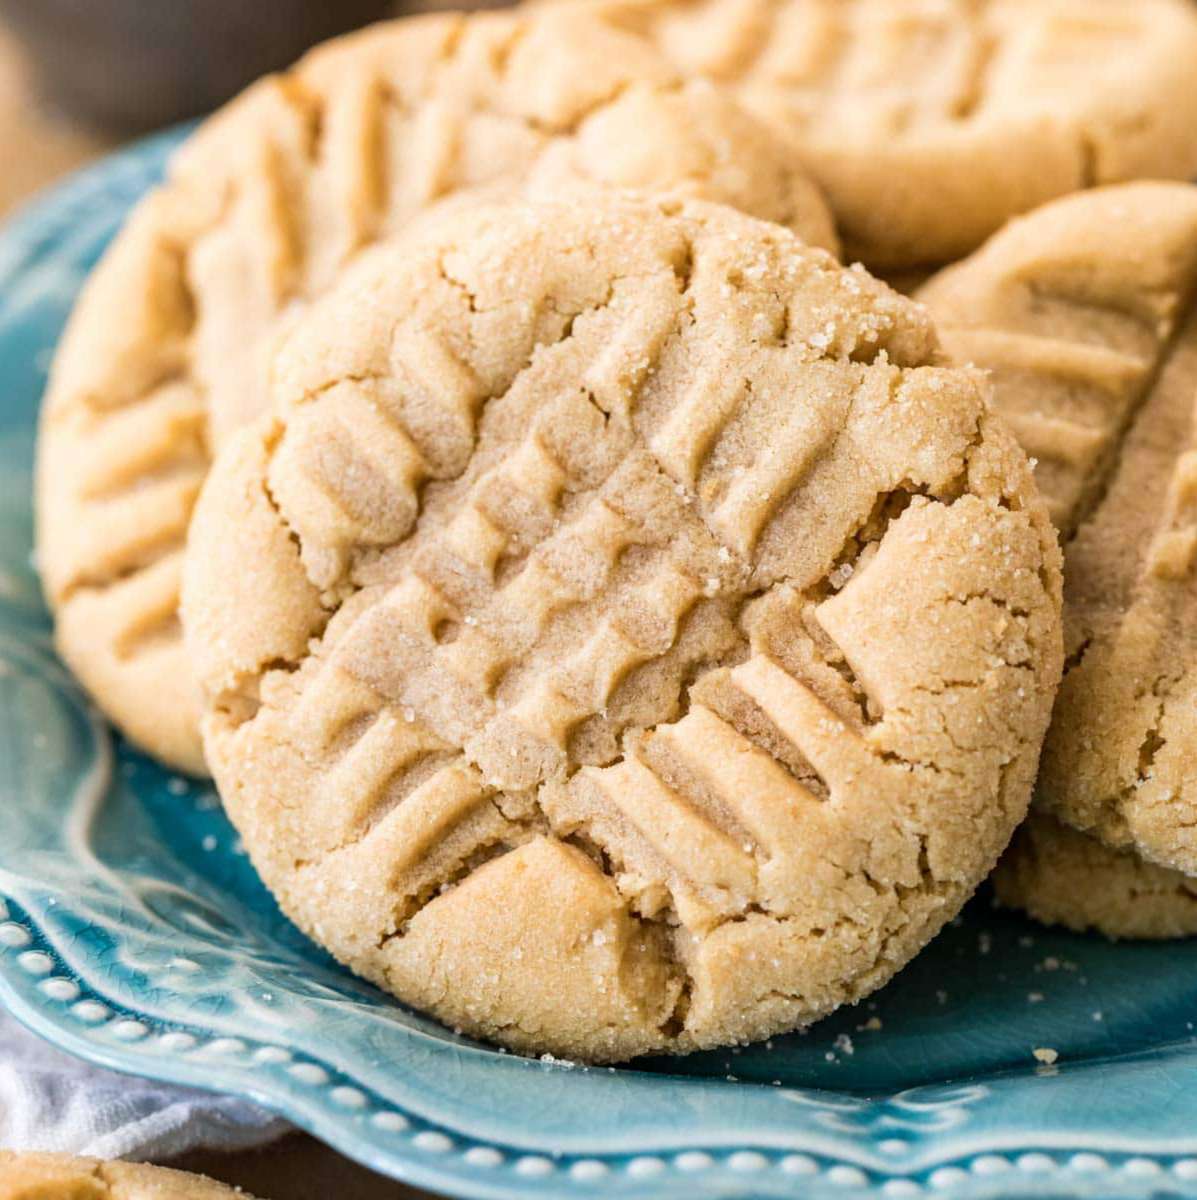 I migliori biscotti al burro di arachidi di sempre! puzzle online